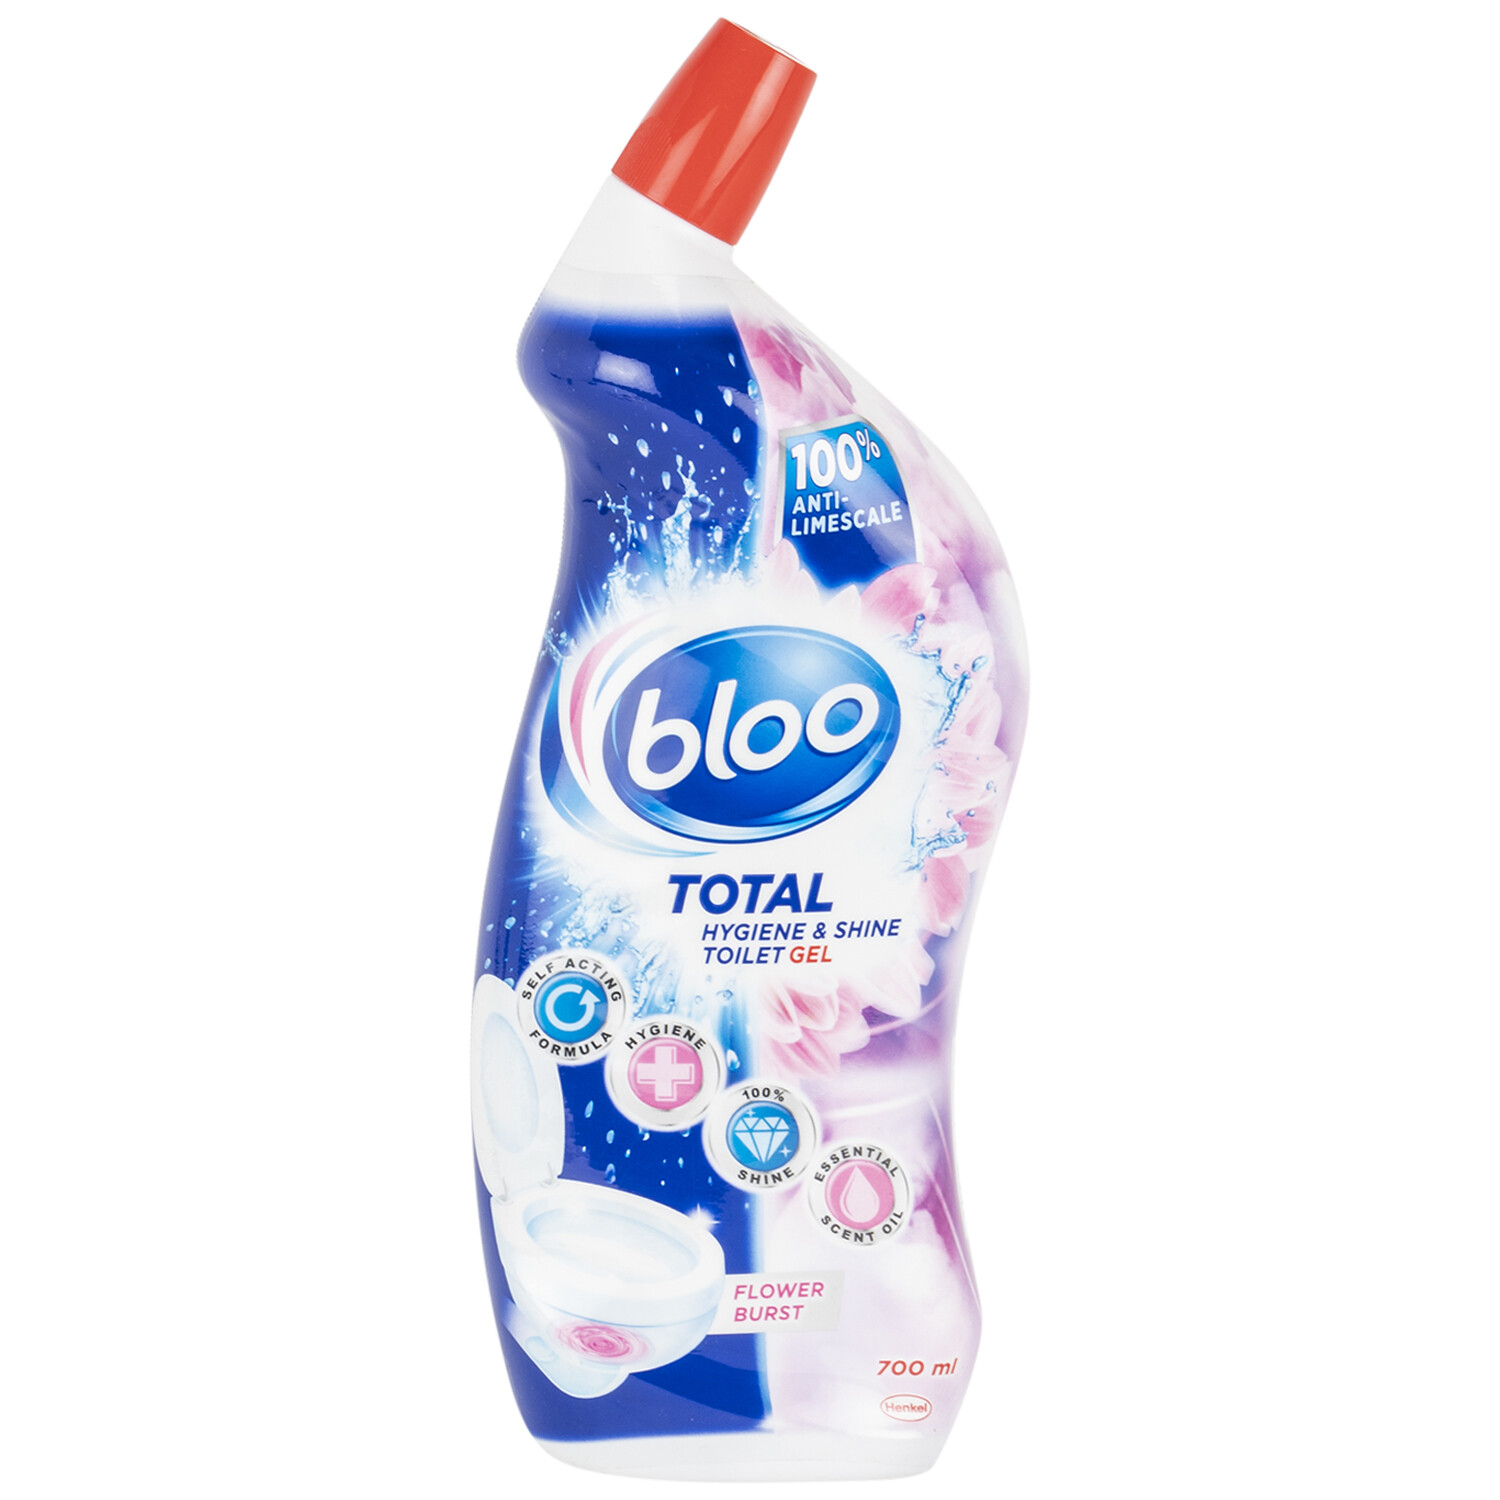 Bloo Liquid Clean 700ml - Flower Burst Image